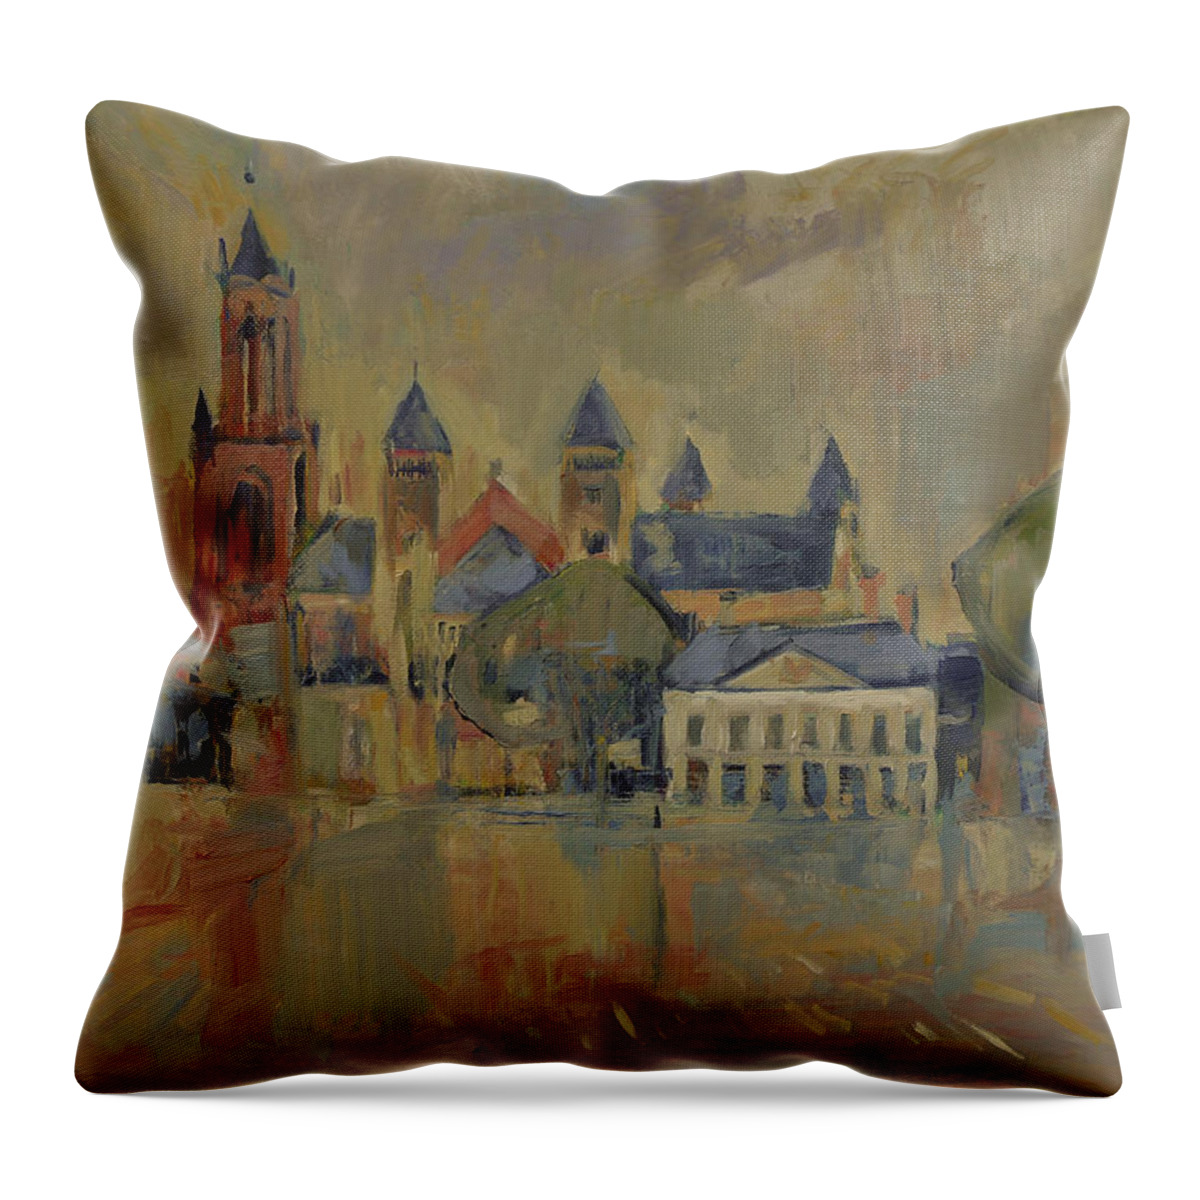 Maastricht Throw Pillow featuring the painting Saint Servaas Basilica Maastricht by Nop Briex